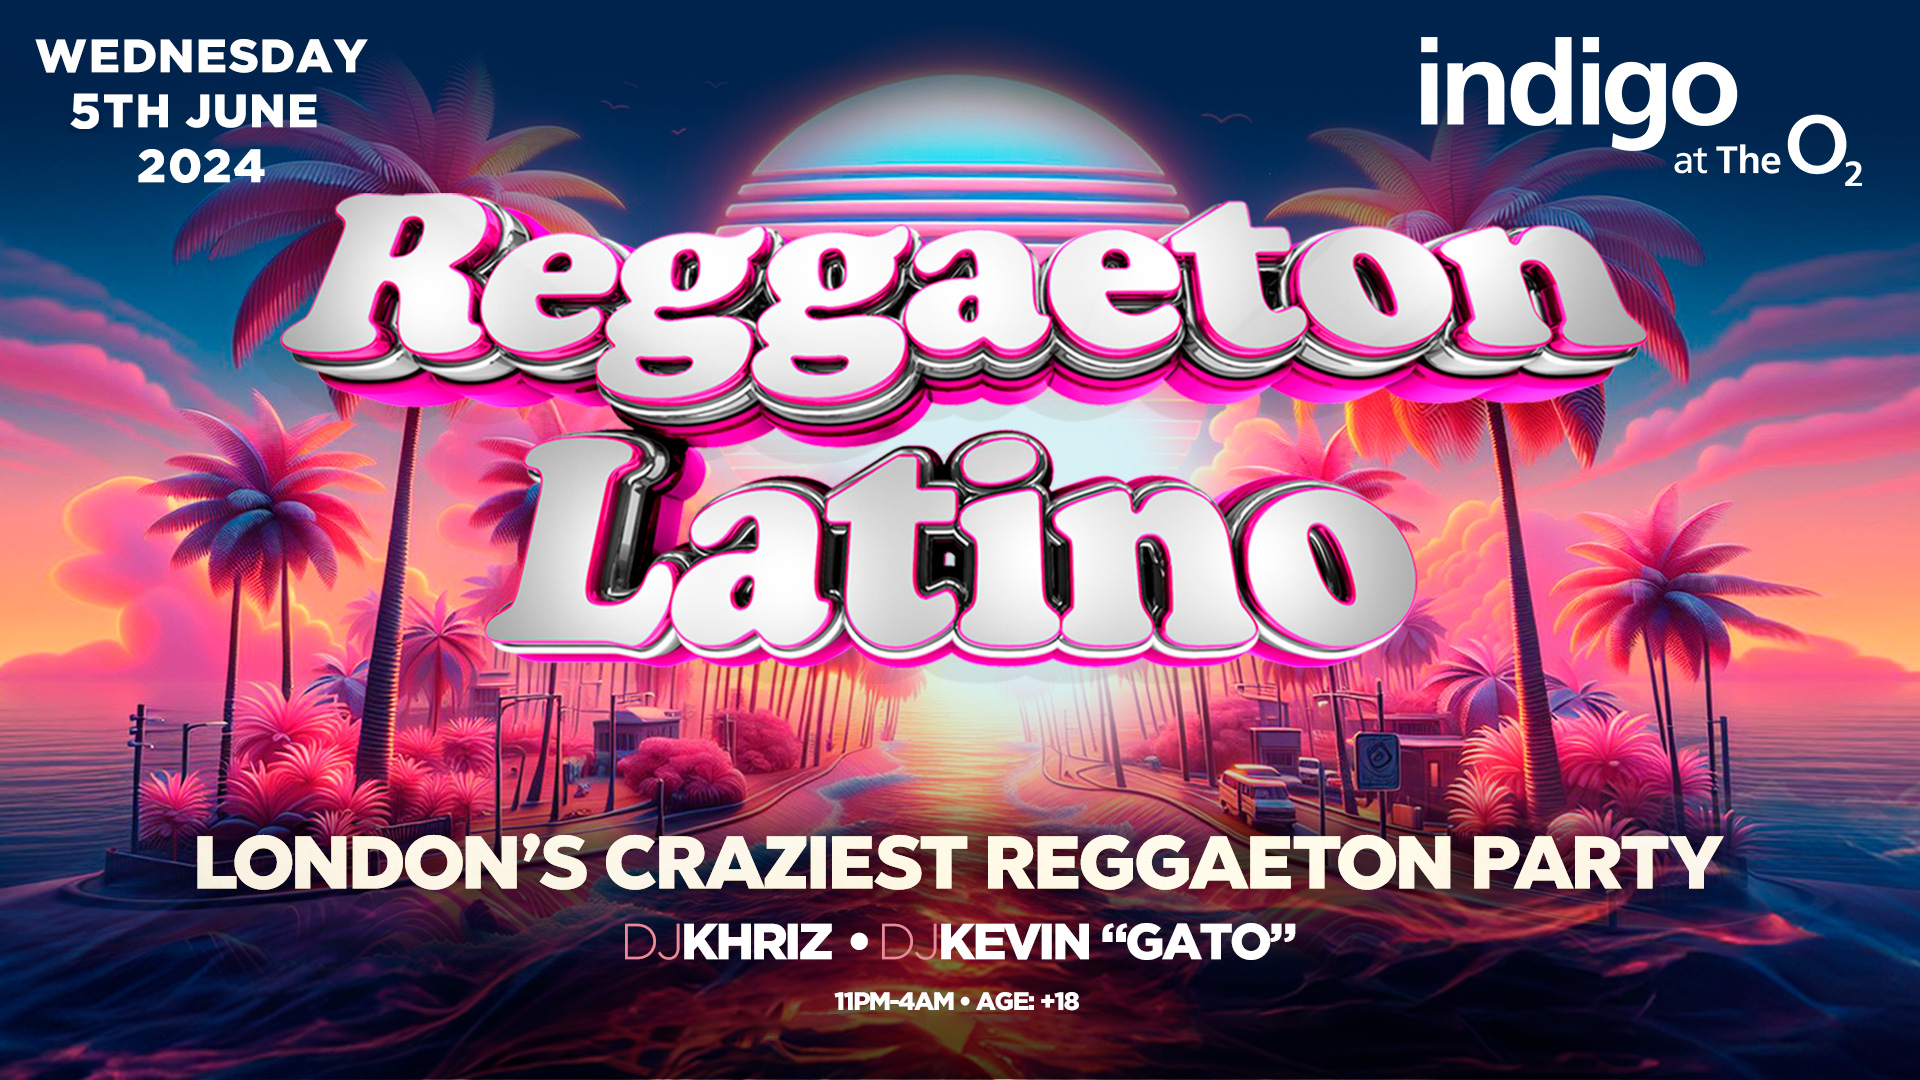 Reggaeton Latino Party